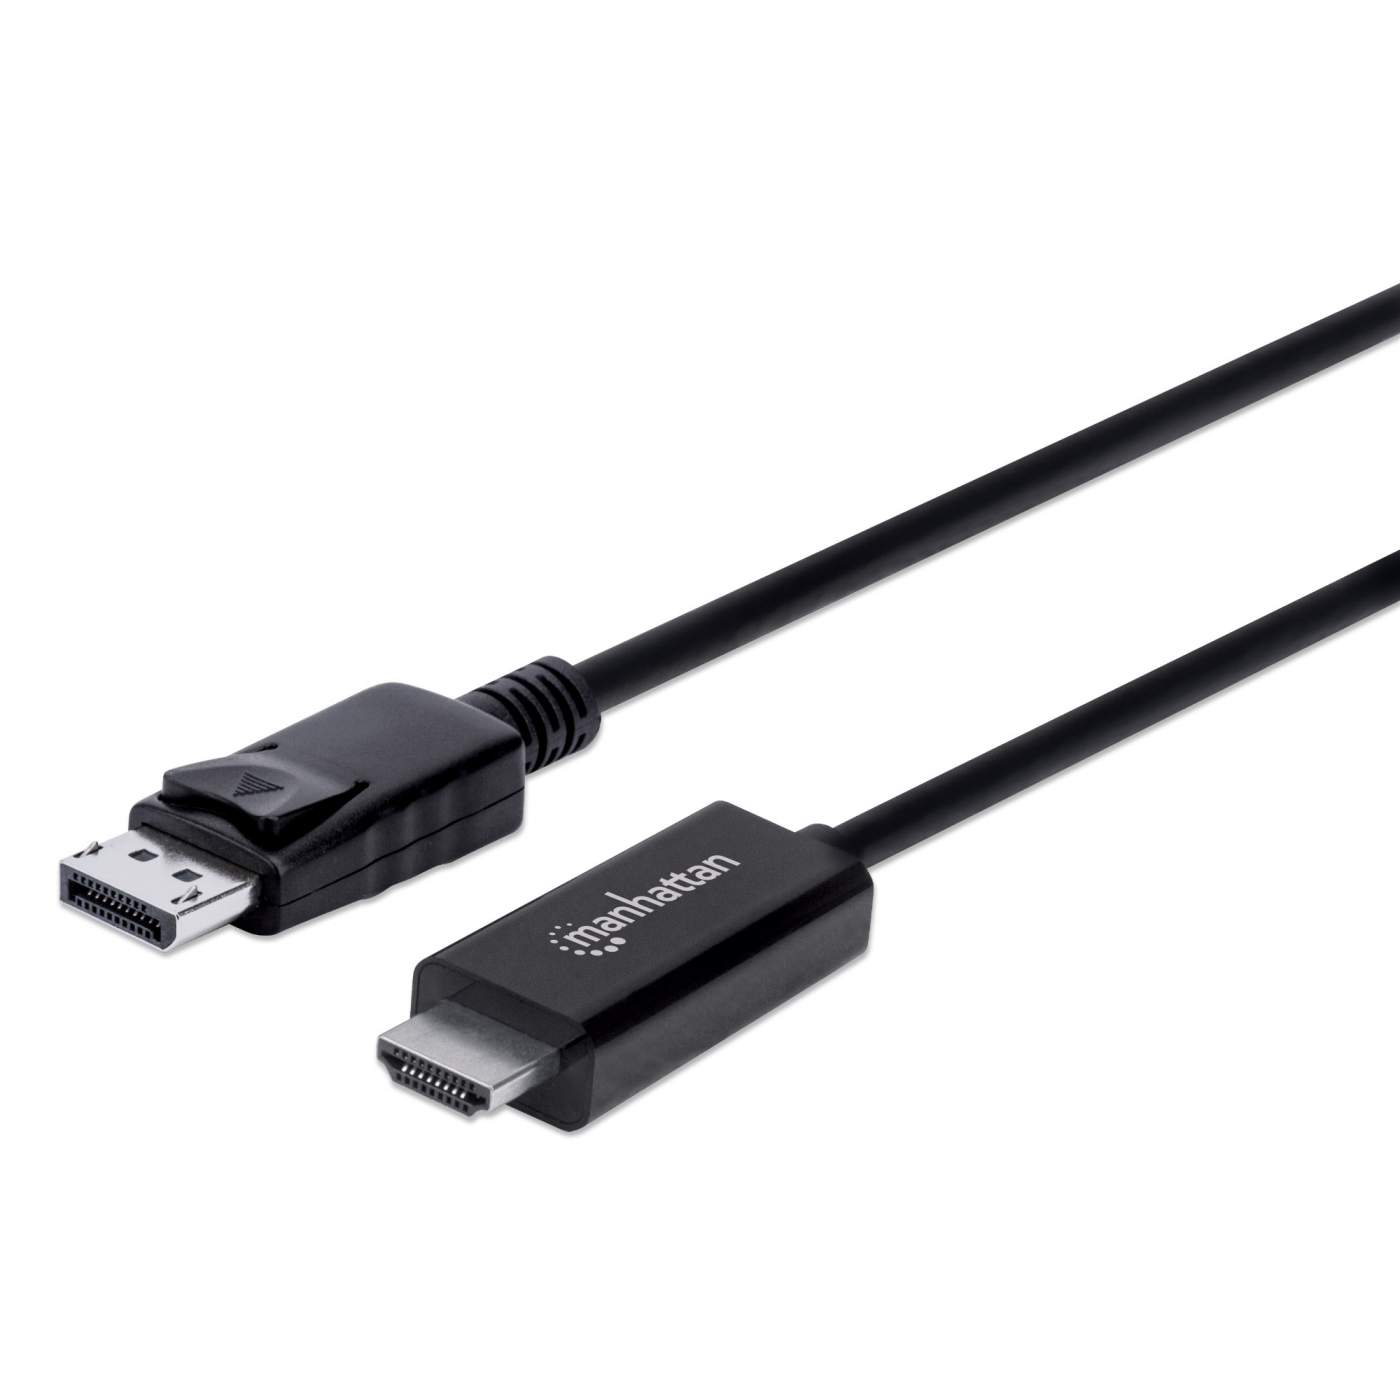 4K@60Hz DisplayPort to HDMI Cable Image 1